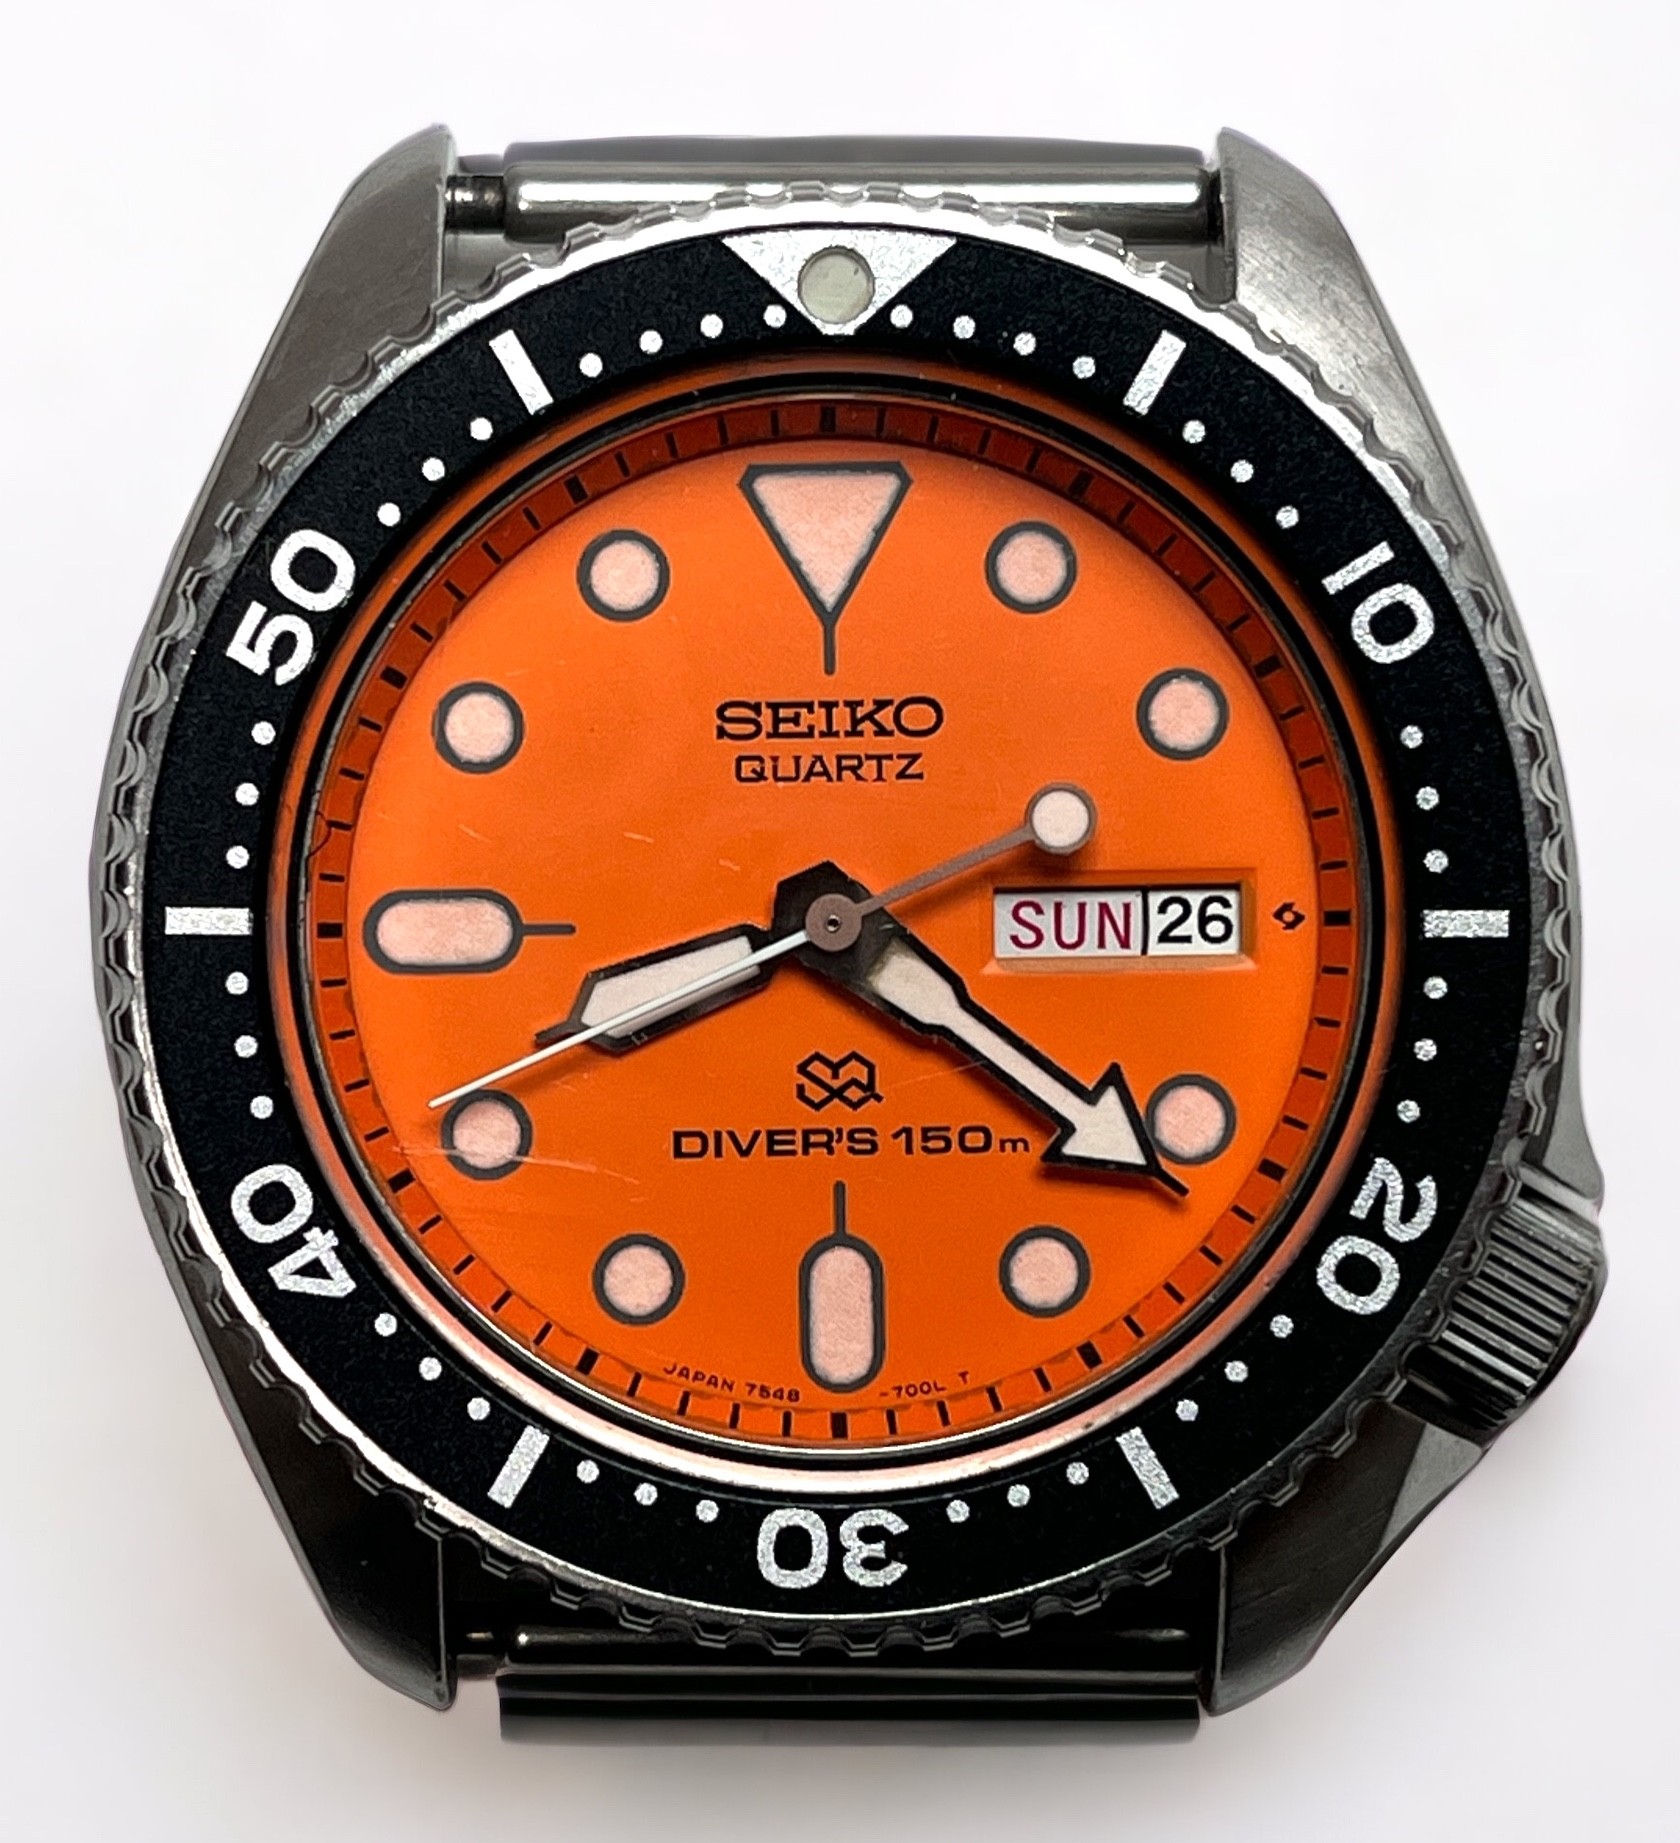 A vintage Seiko Quartz SQ Divers 150m stainless steel wristwatch, the orange enamel dial with dot